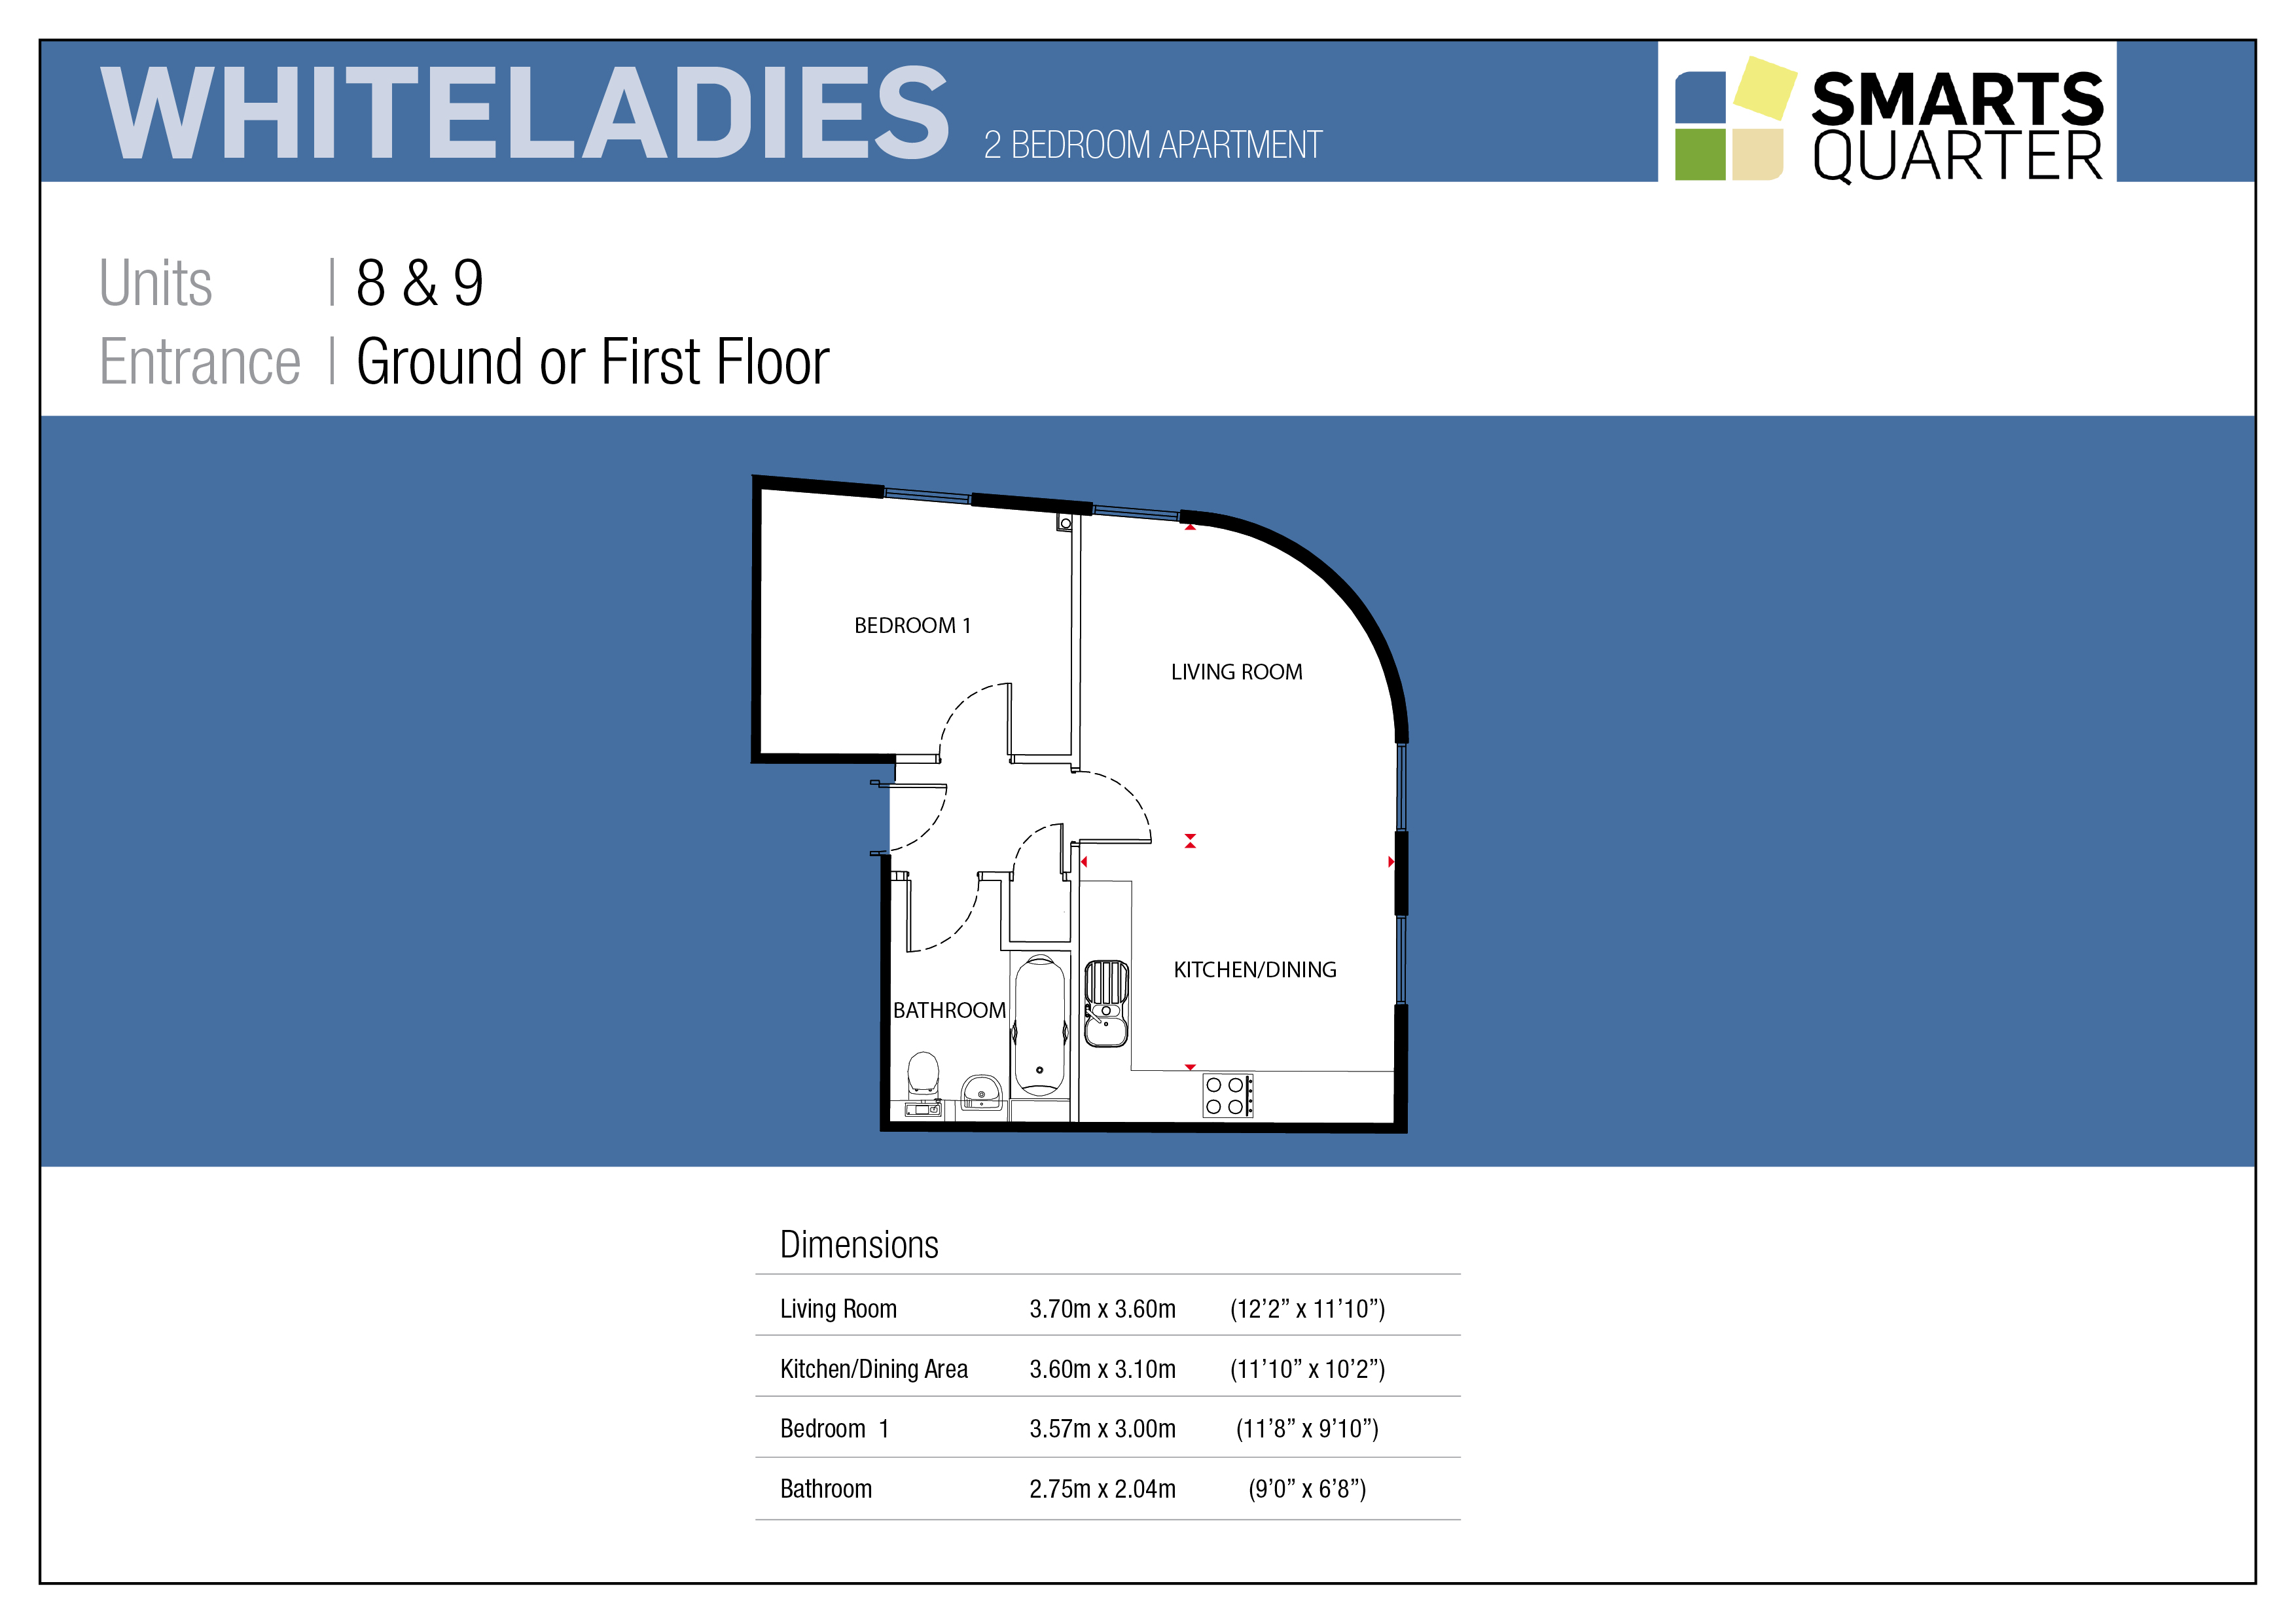 Whiteladies Apartment Floor Plan part of the New Smarts Quarter Development